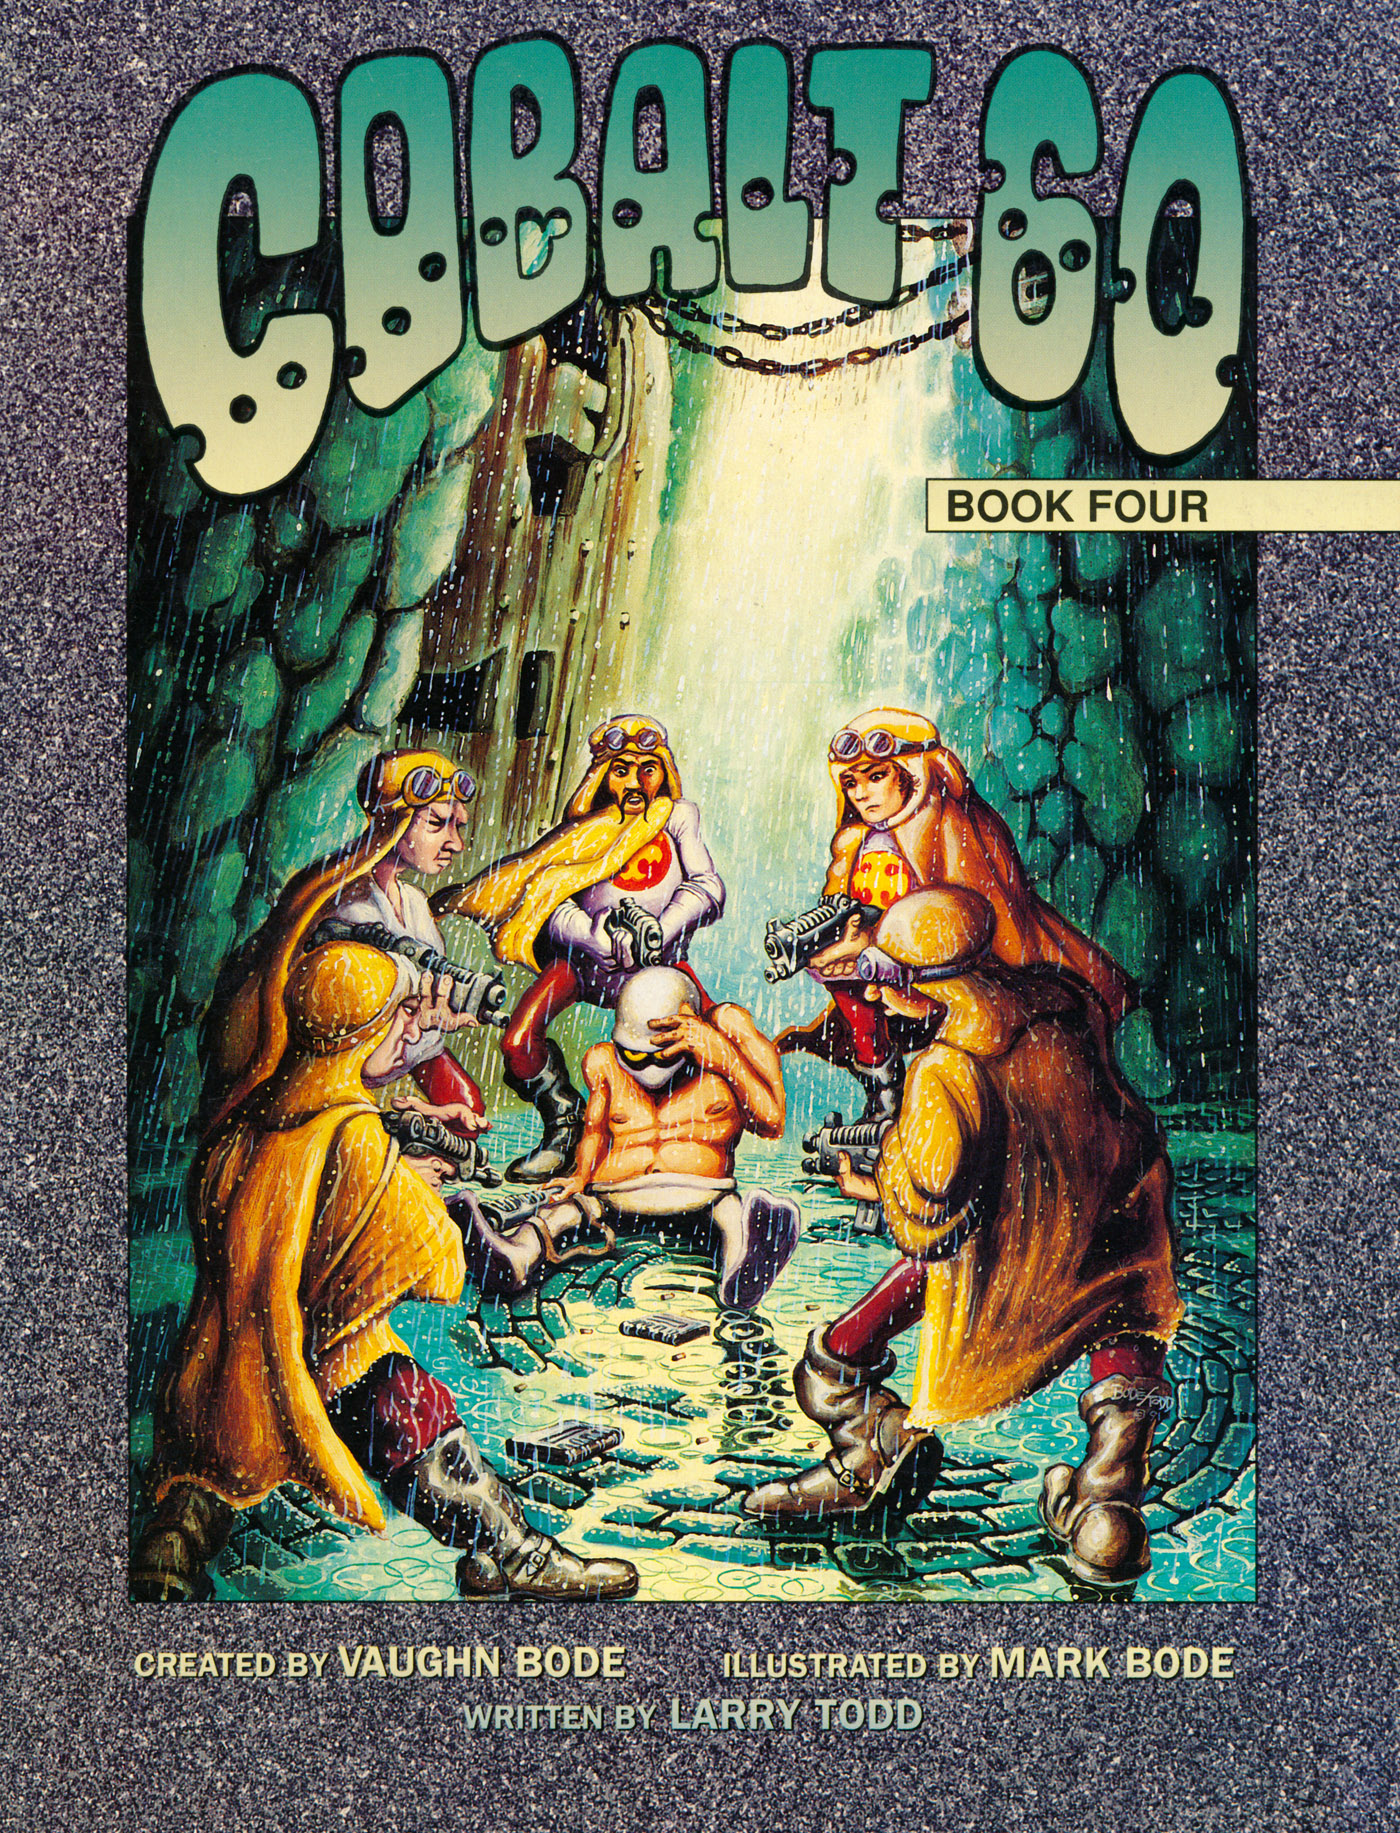 Read online Cobalt 60 comic -  Issue #4 - 1